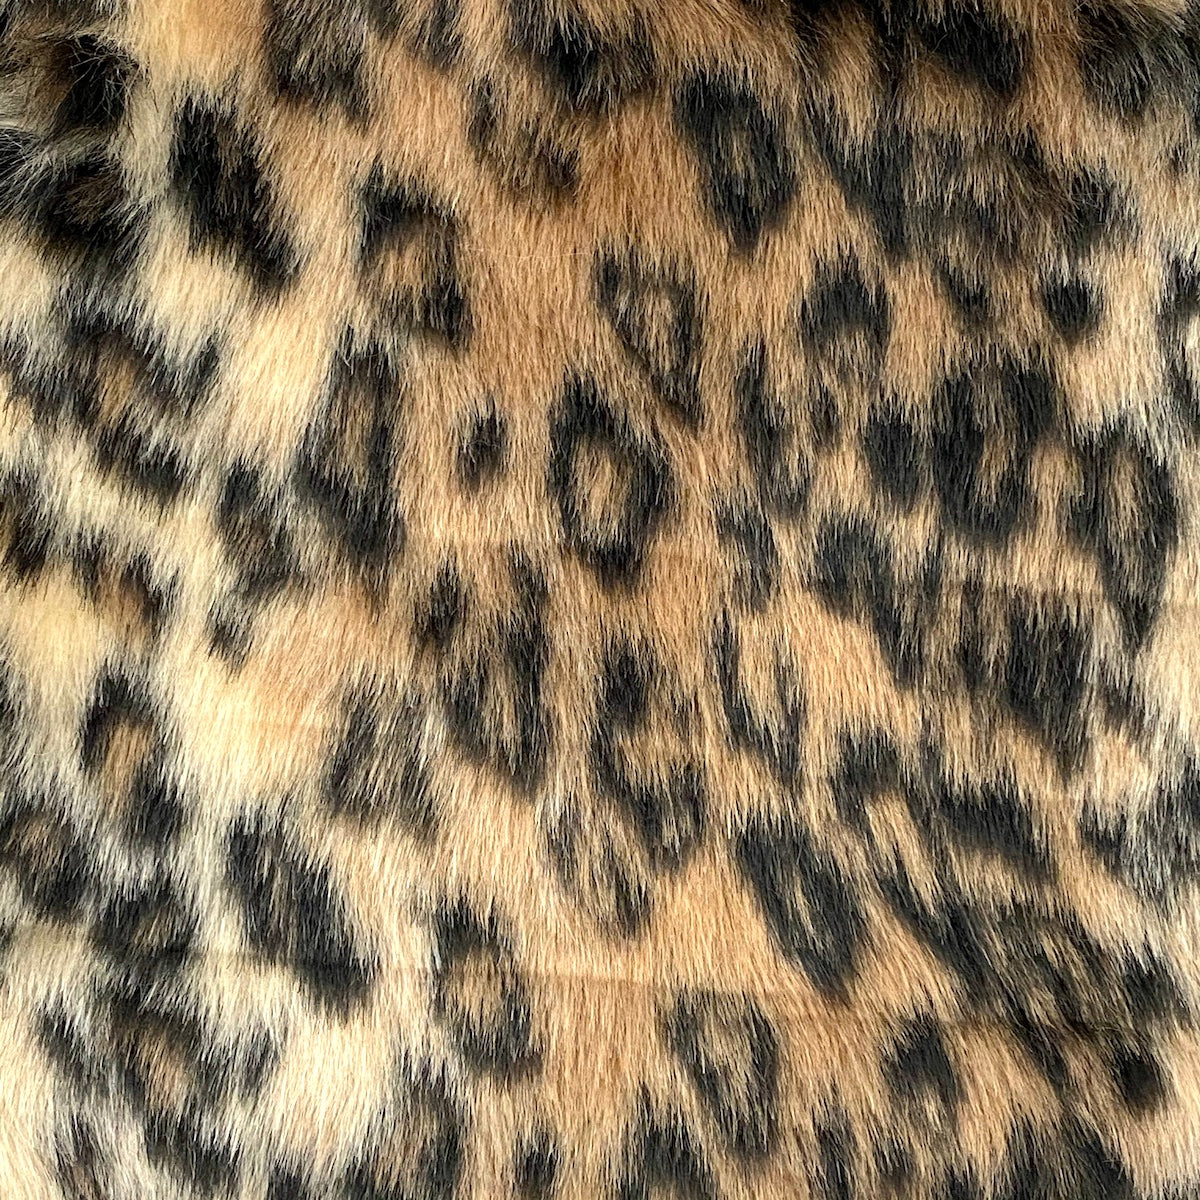 Leopard Print Wild Animal Leopard Skin Pattern Cotton Fabric